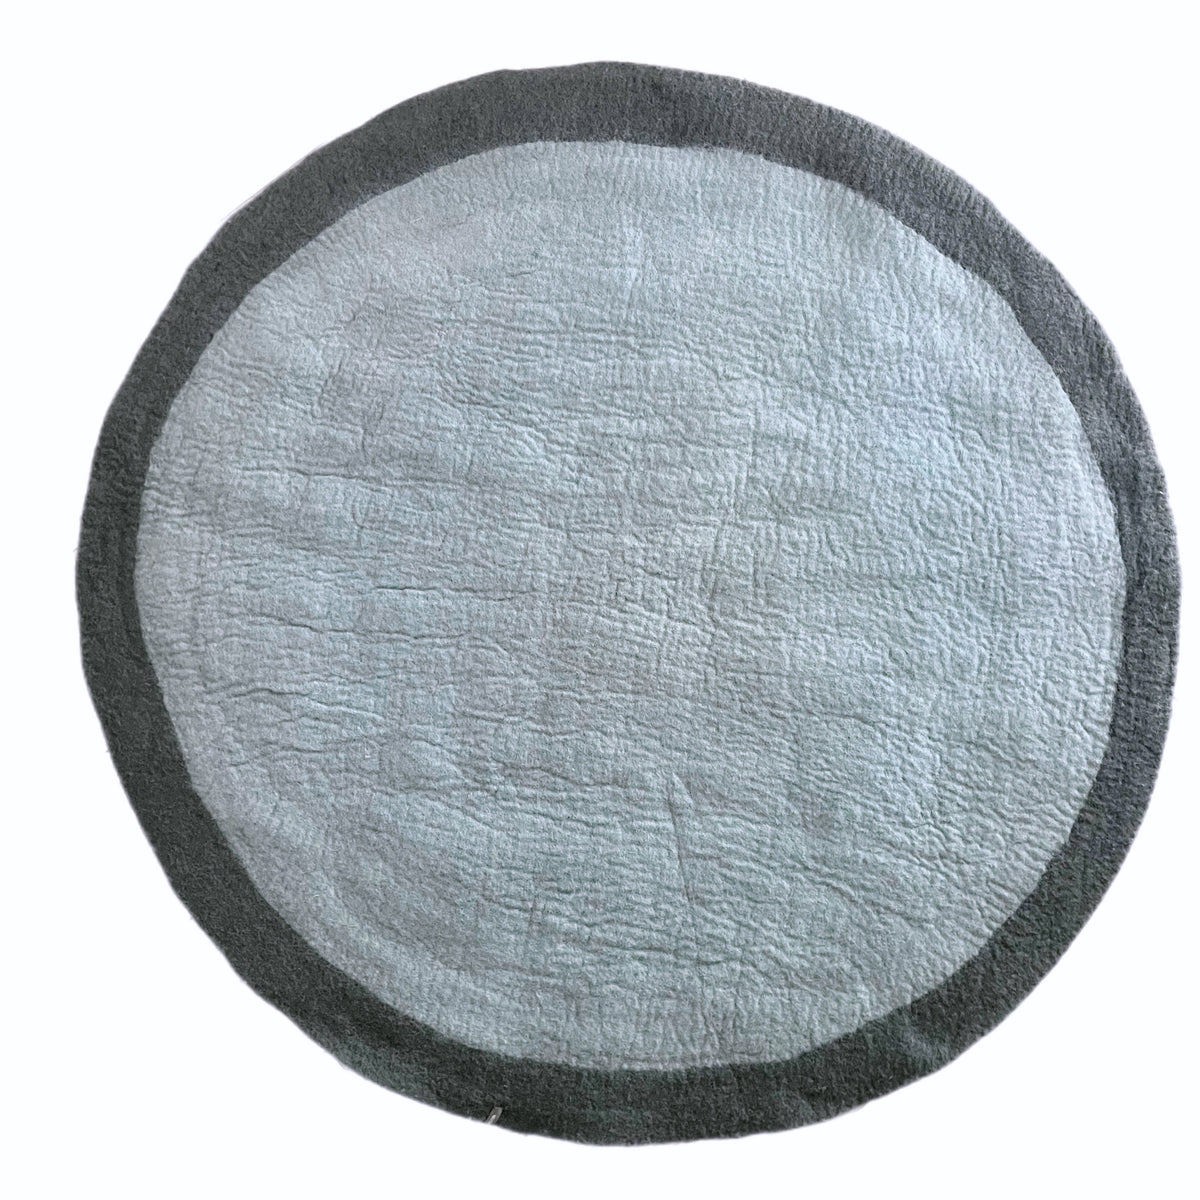 Muskhane | lumbini round rug | mineral blue / stormy grey